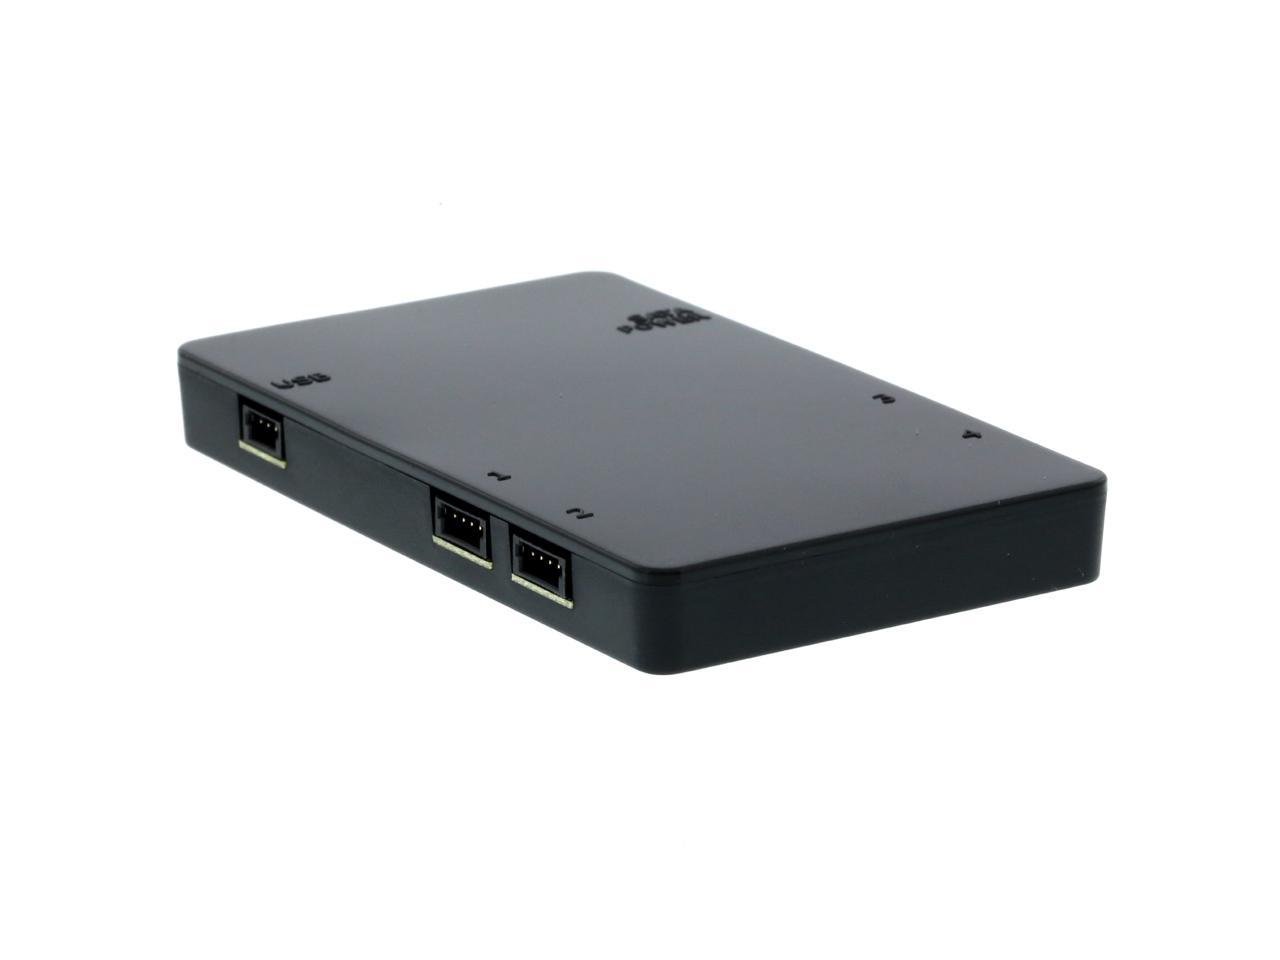 Cooler Master RGB Controller/Hub for Computer Case Fans - Newegg.com